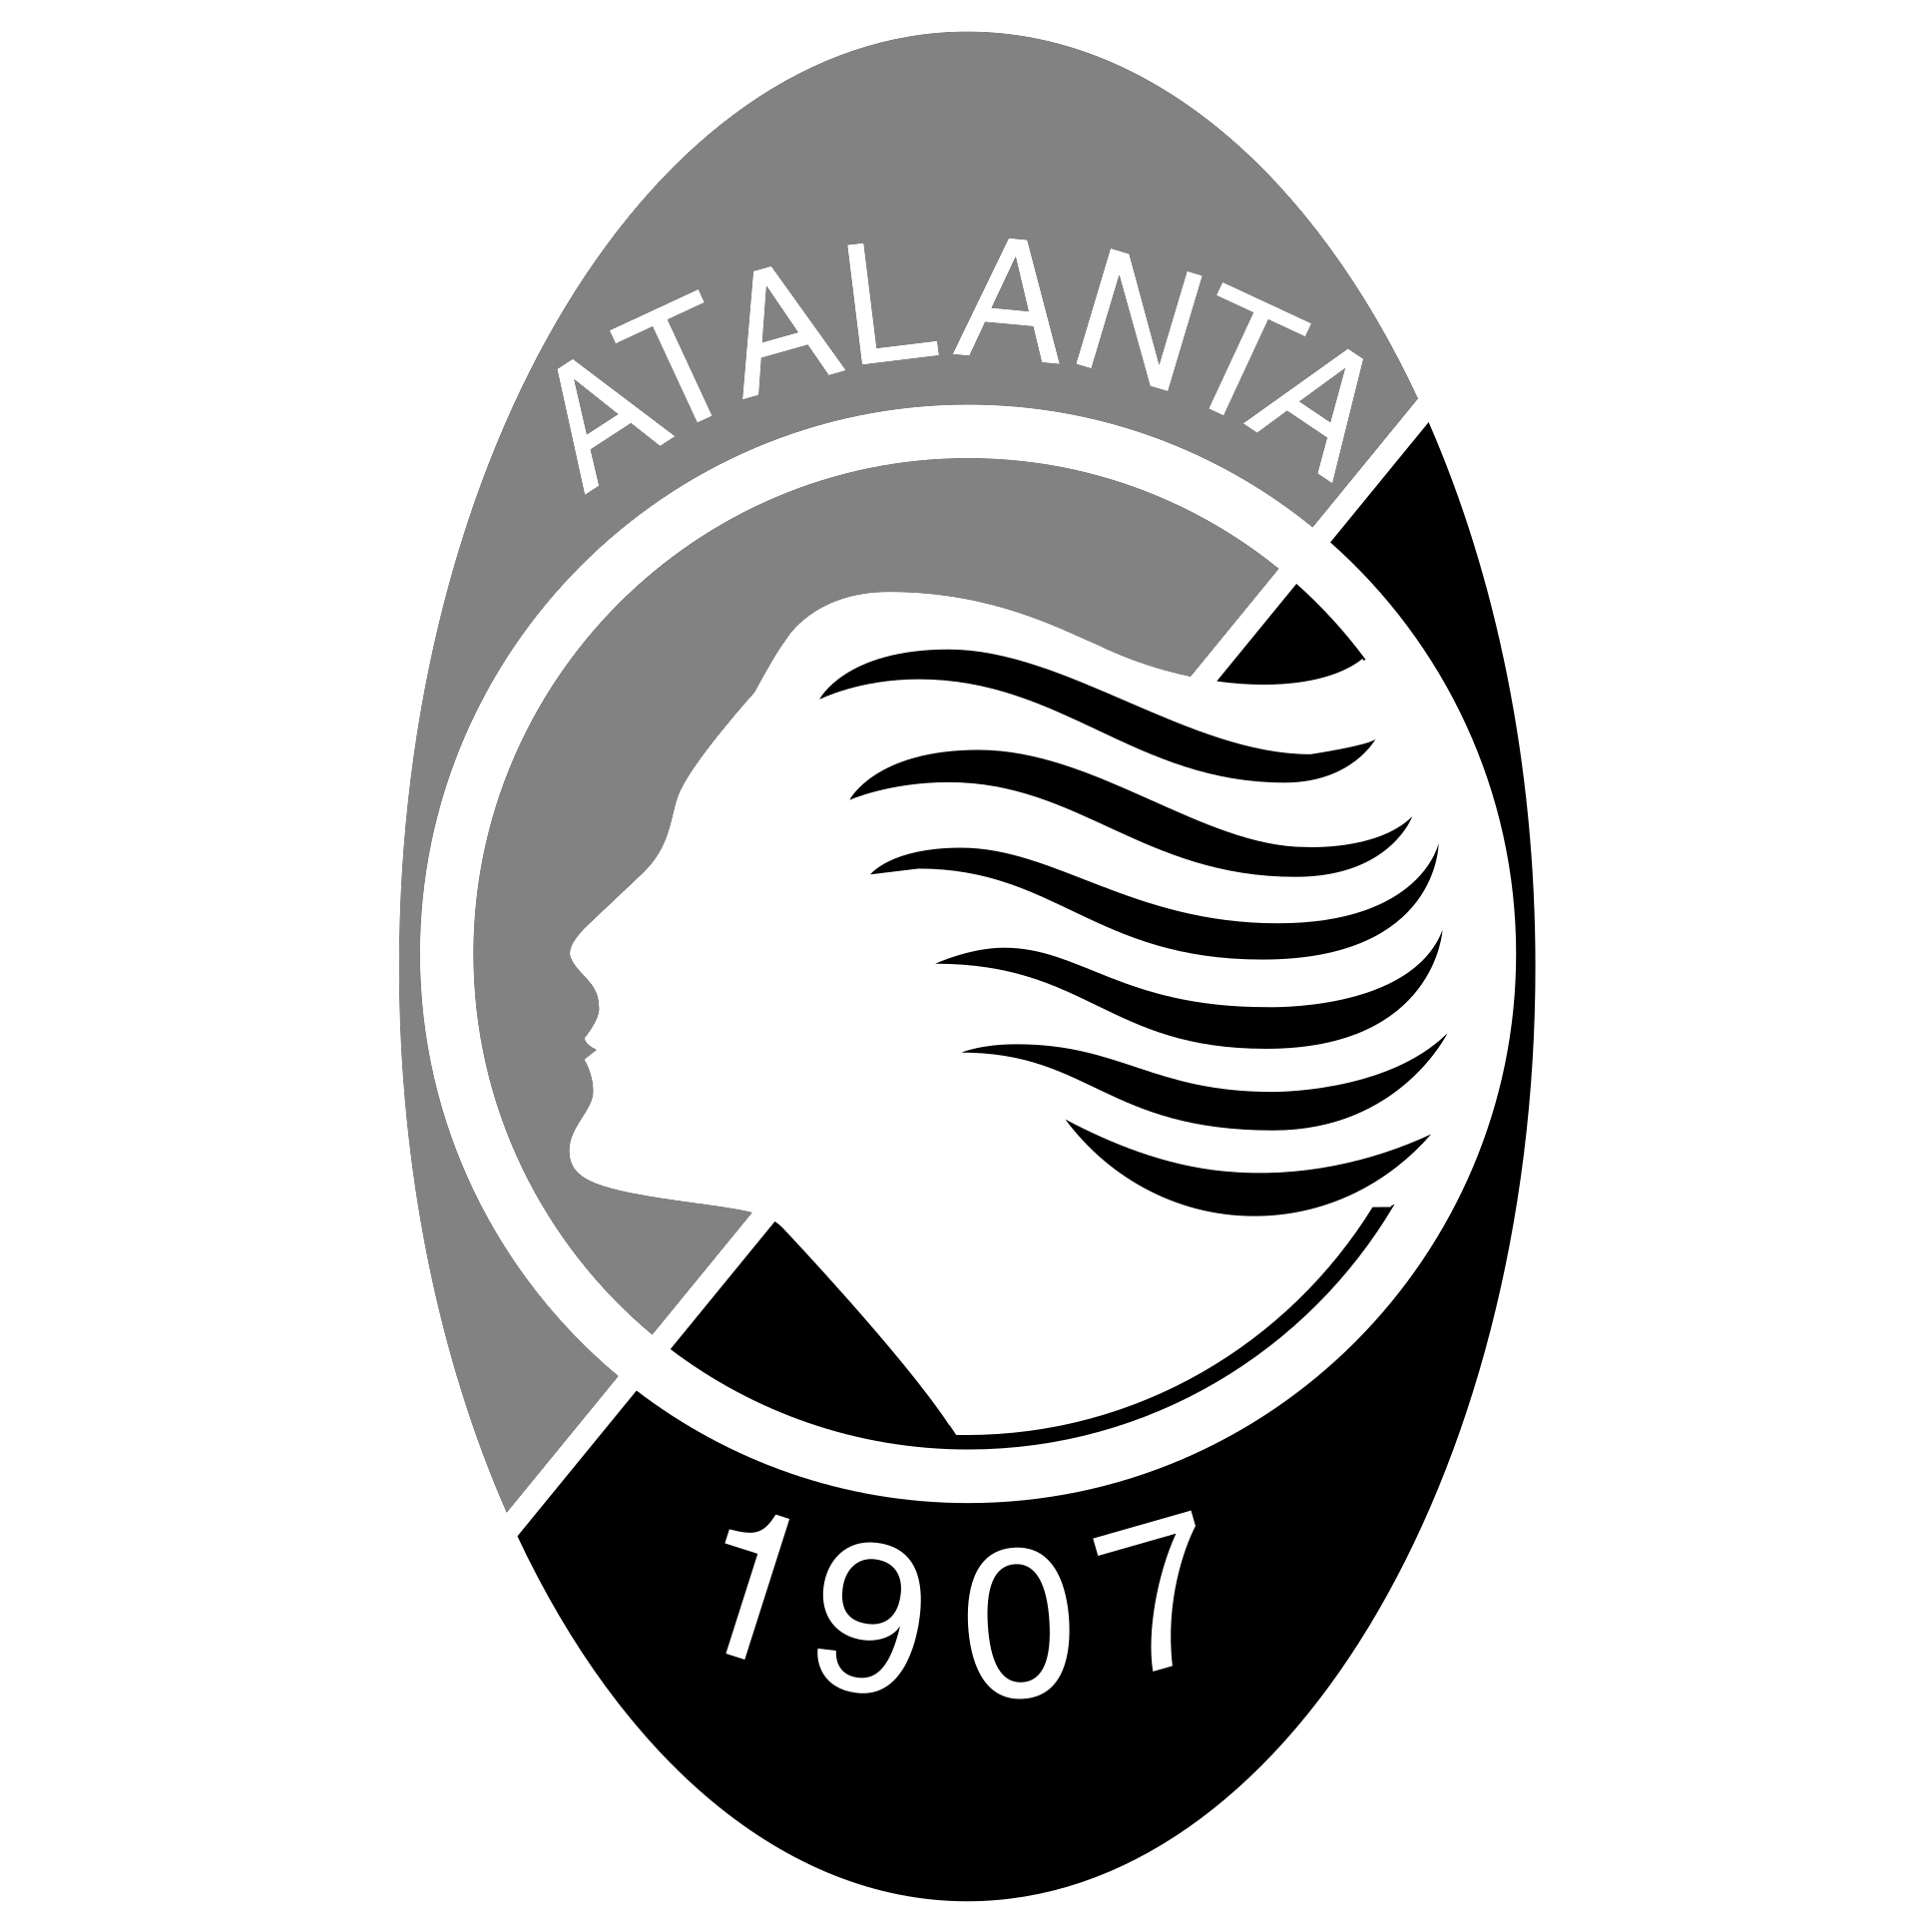 Billy Bilotta_Atalanta calcio